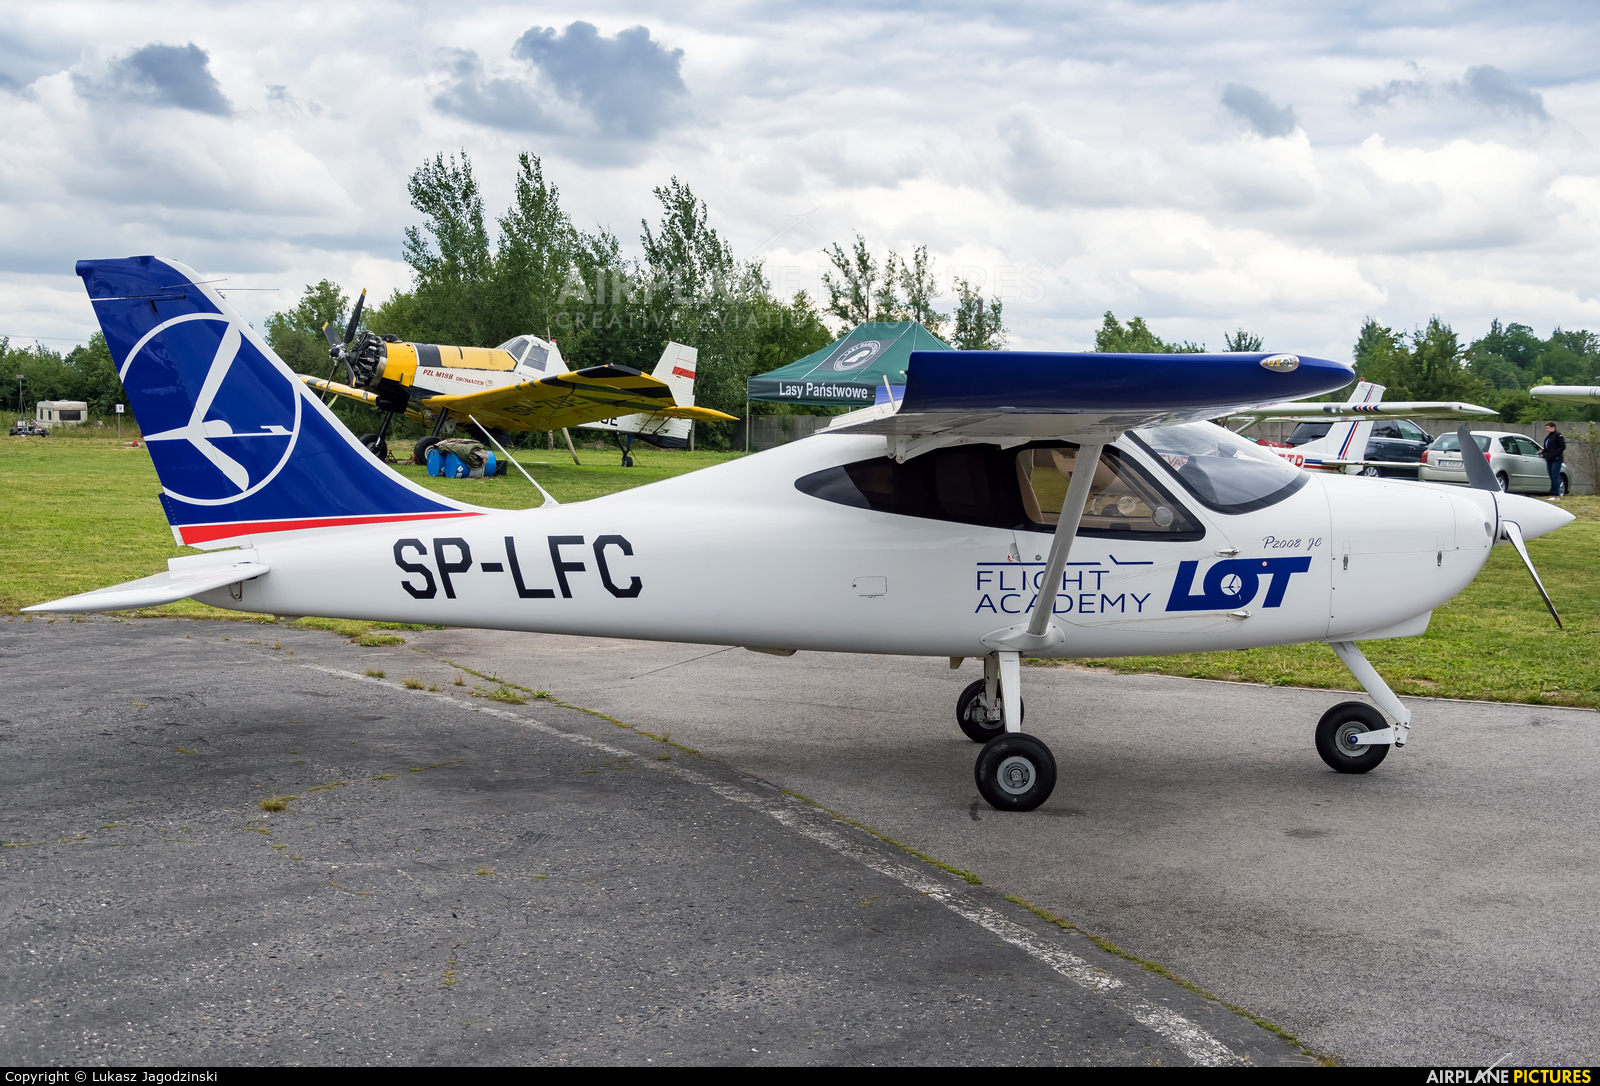  SP-LFC aircraft at Piotrków Trybunalski